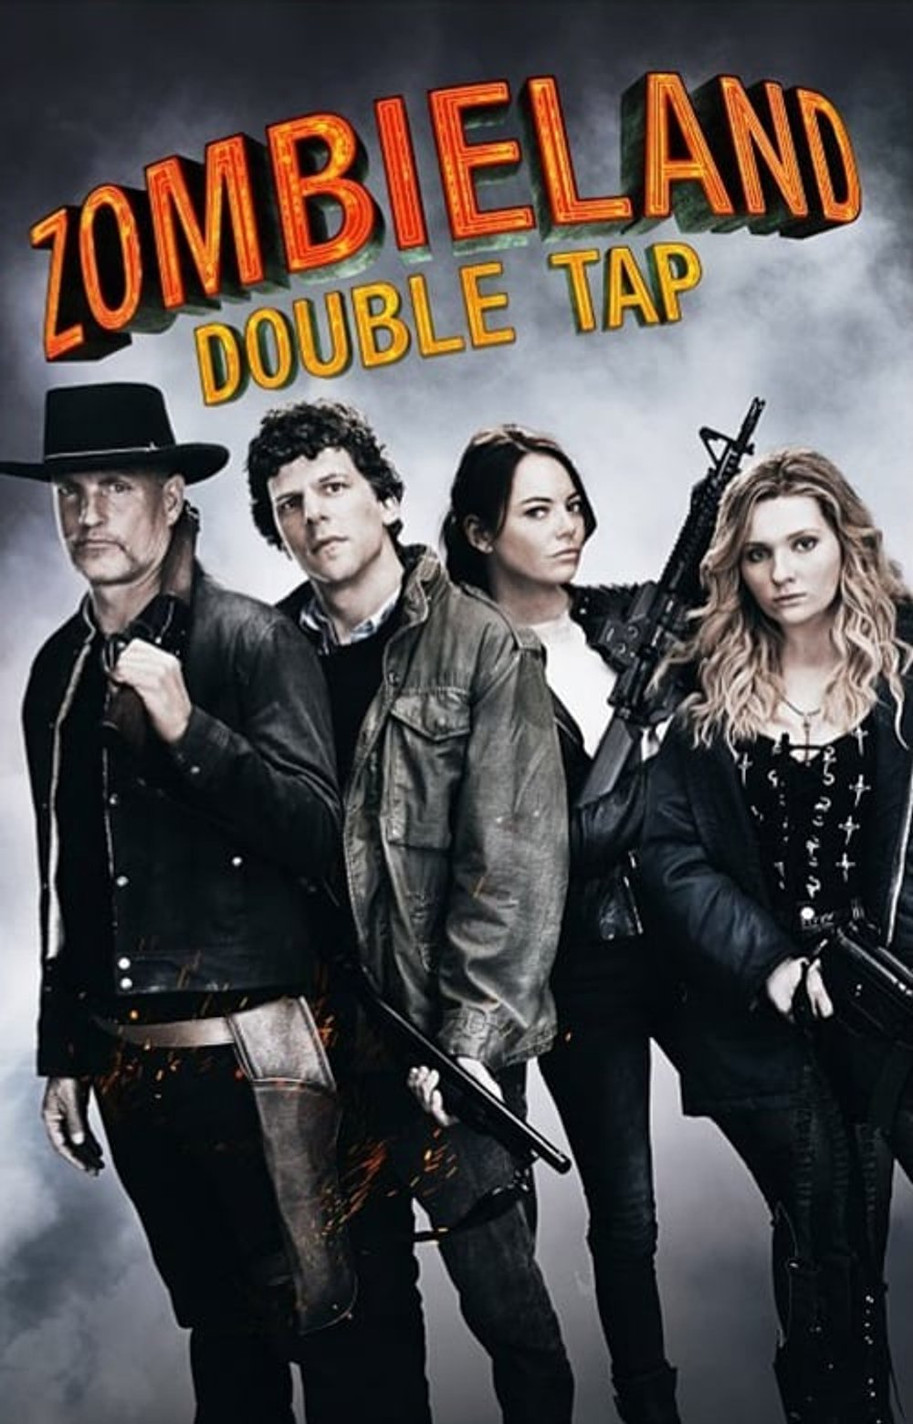 Zombieland, Double Tap, Woody Harrelson, Emma Stone, Jesse Eisenberg, Abigail Breslin, sequel, Ruben Fleischer, JoBlo.com